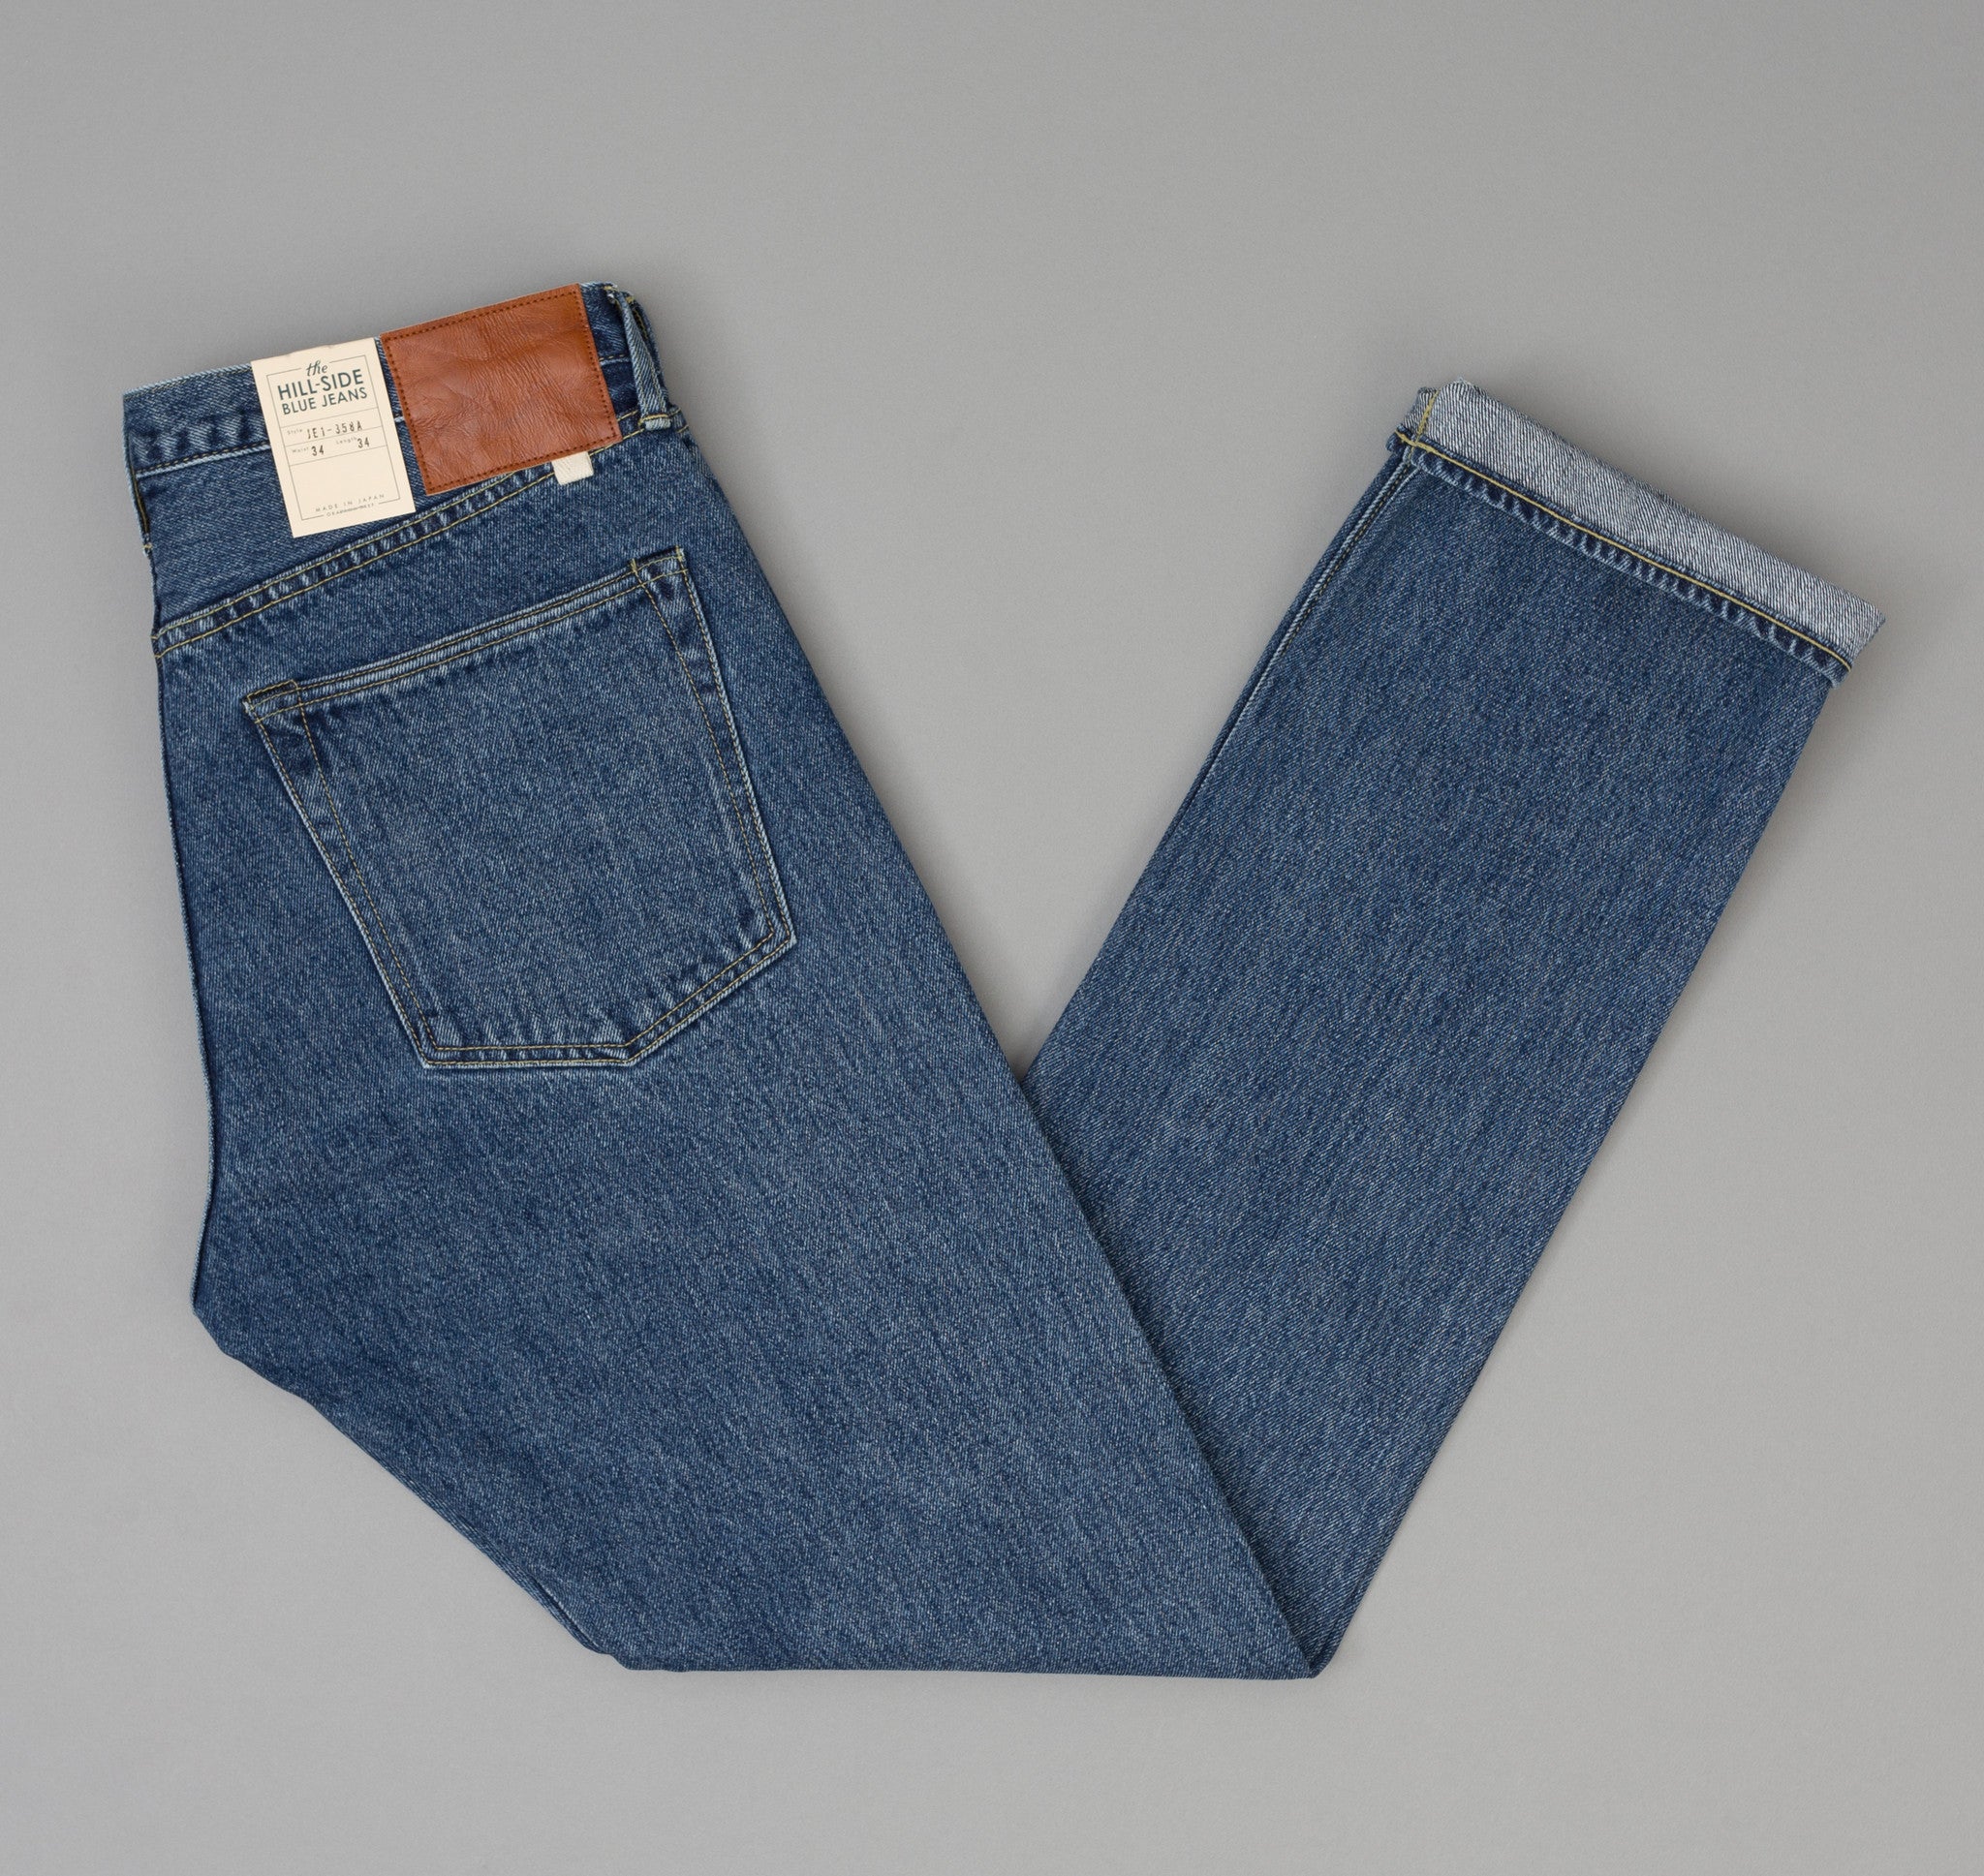 blue selvedge jeans